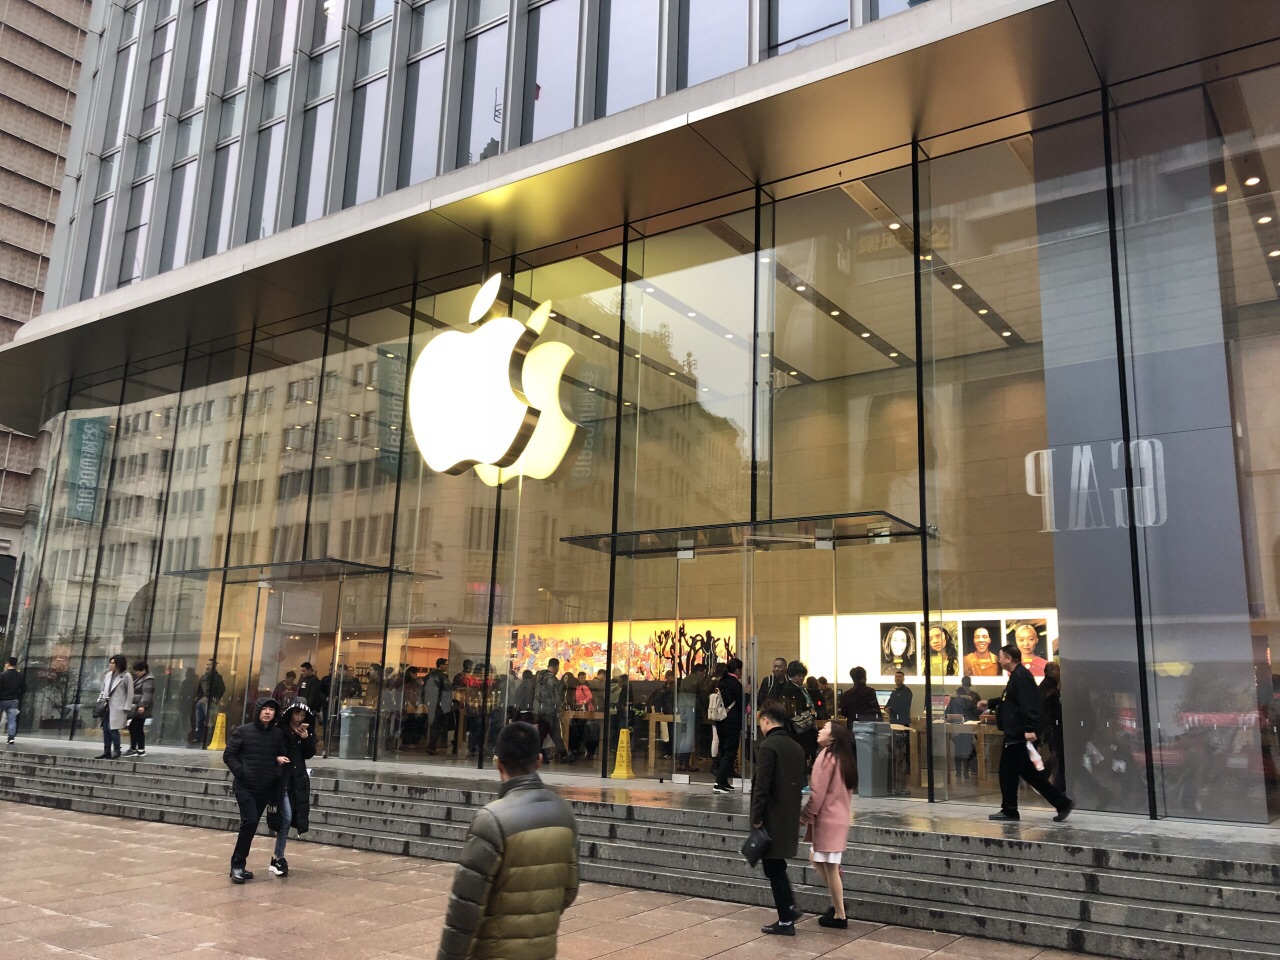 store 零售店(南京东路店)购物,作为上海的七家苹果专卖店之一,这家店